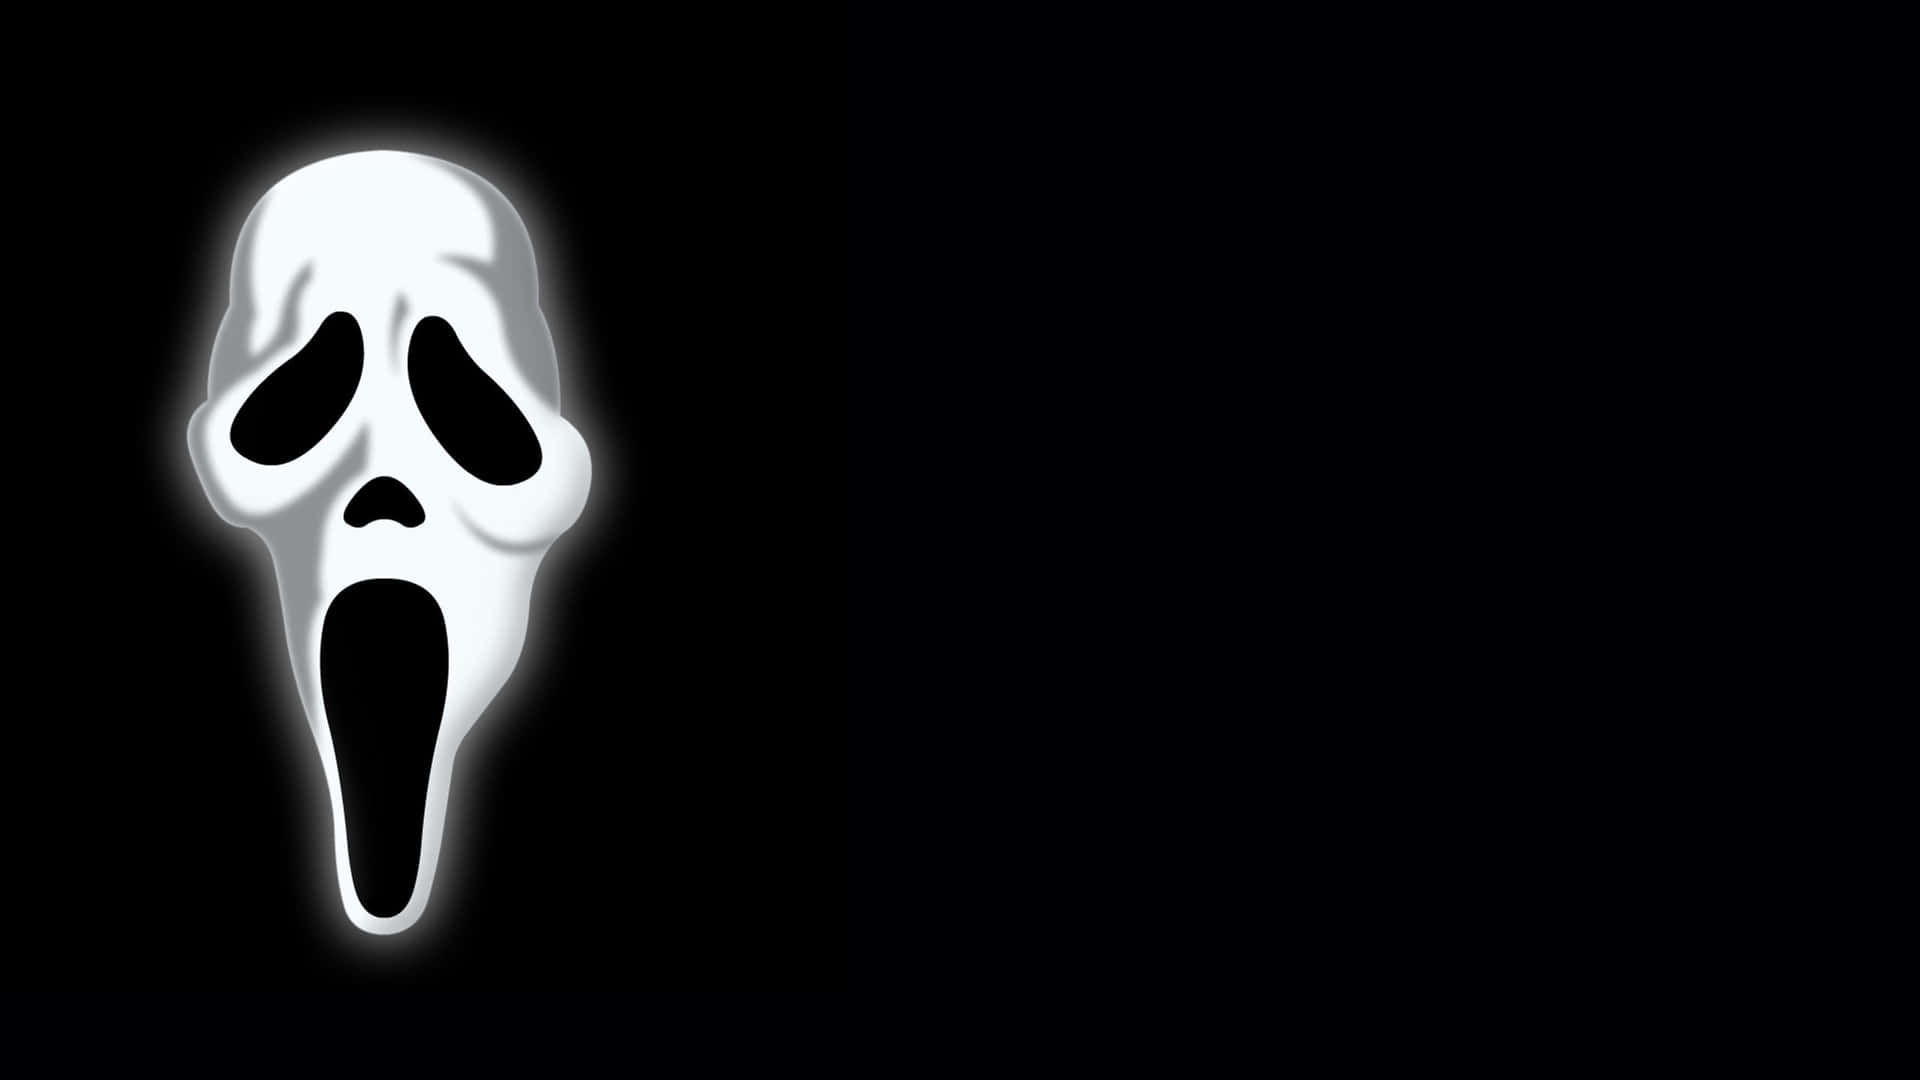 A White Scream Mask On A Black Background